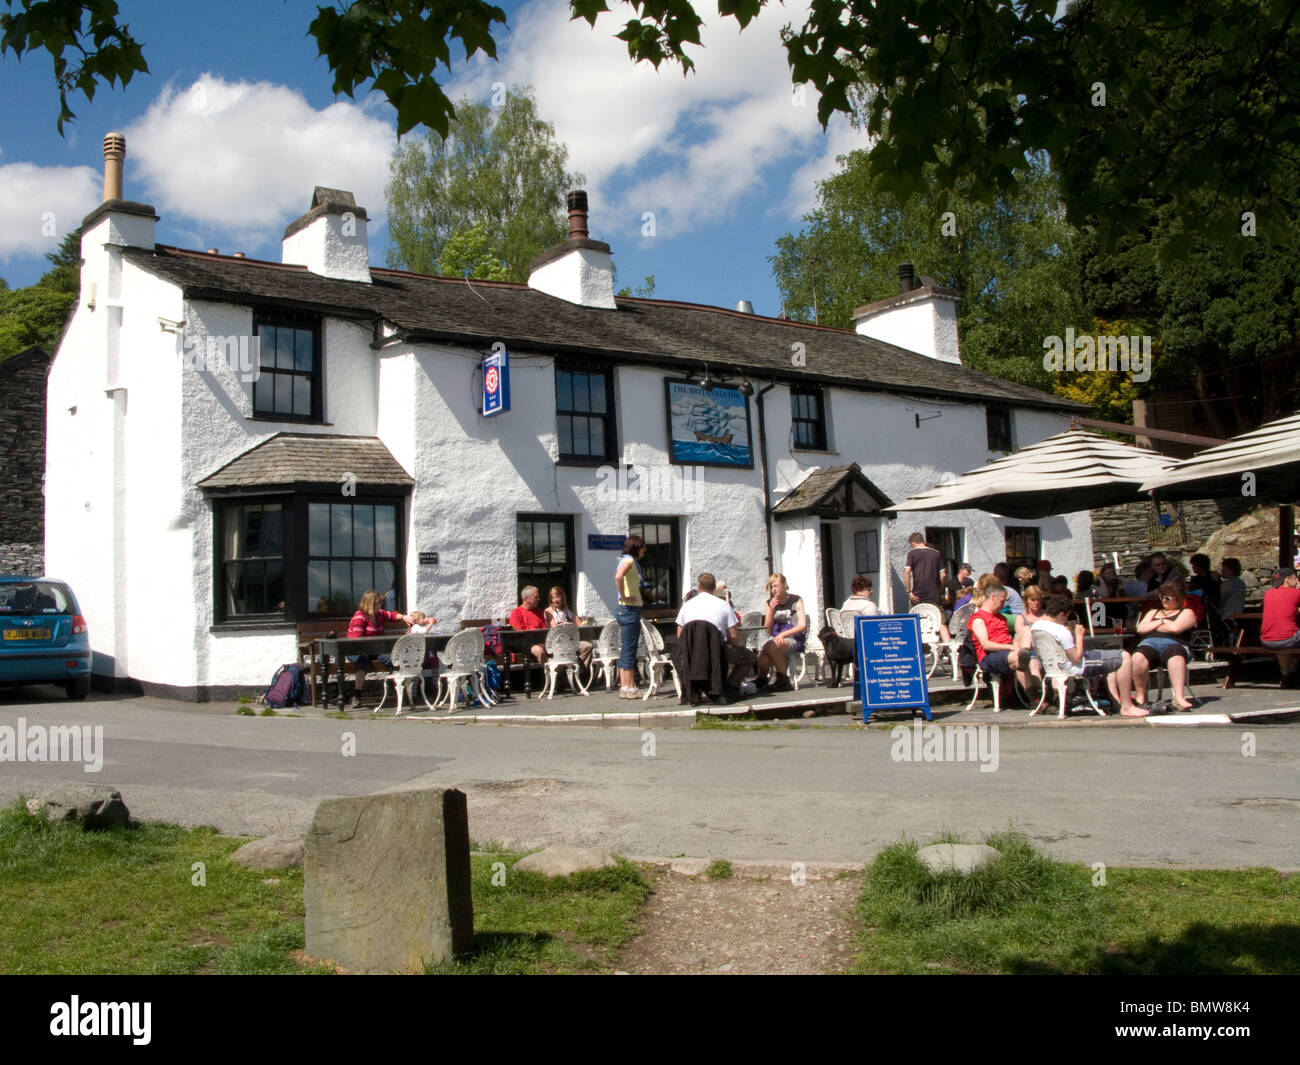 Brittania Inn at Elterwater, Cumbria, The English Lake District Stock Photo